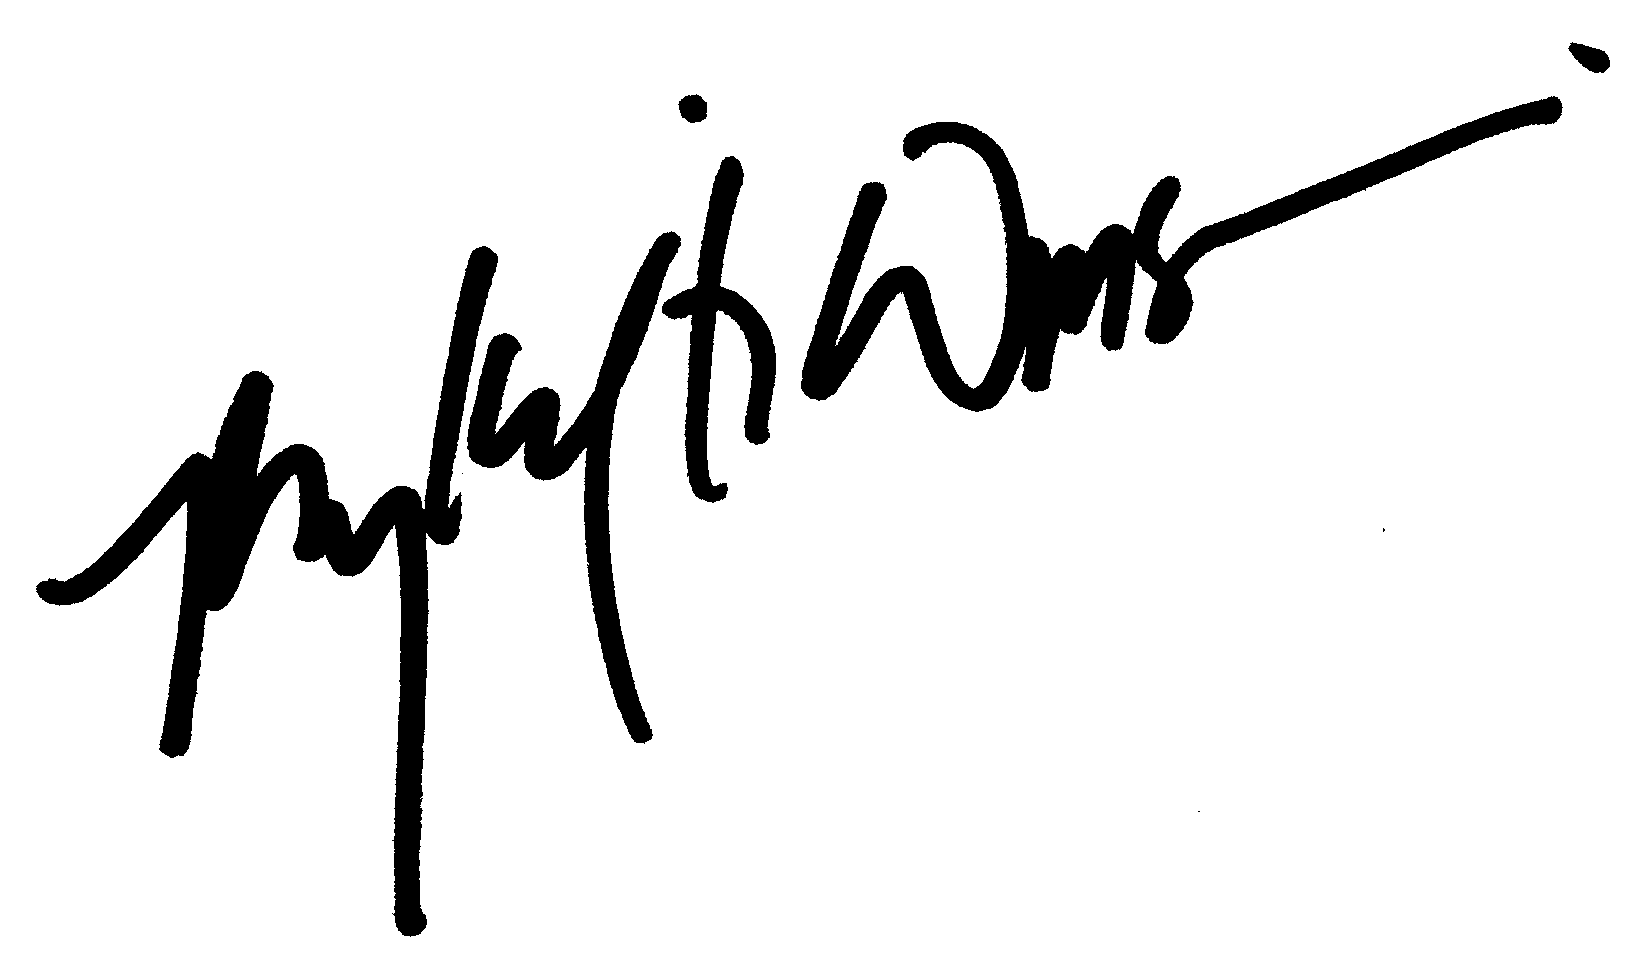 Mykelti Williamson autograph facsimile